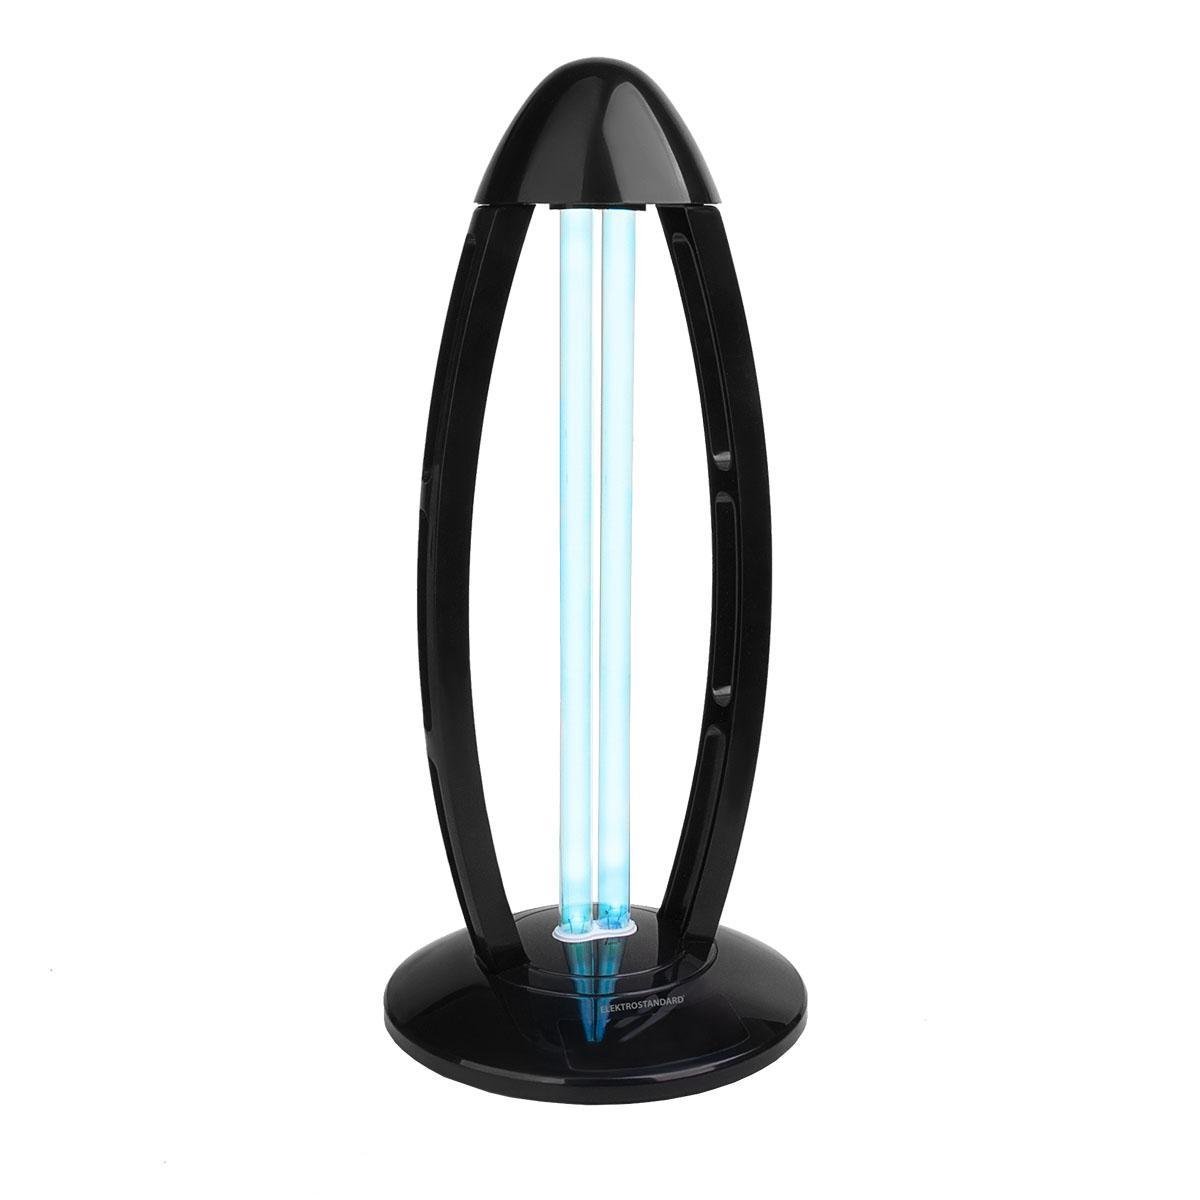 Ультрафиолетовая бактерицидная настольная лампа Elektrostandard UVL-001 чёрный 4690389150760. 